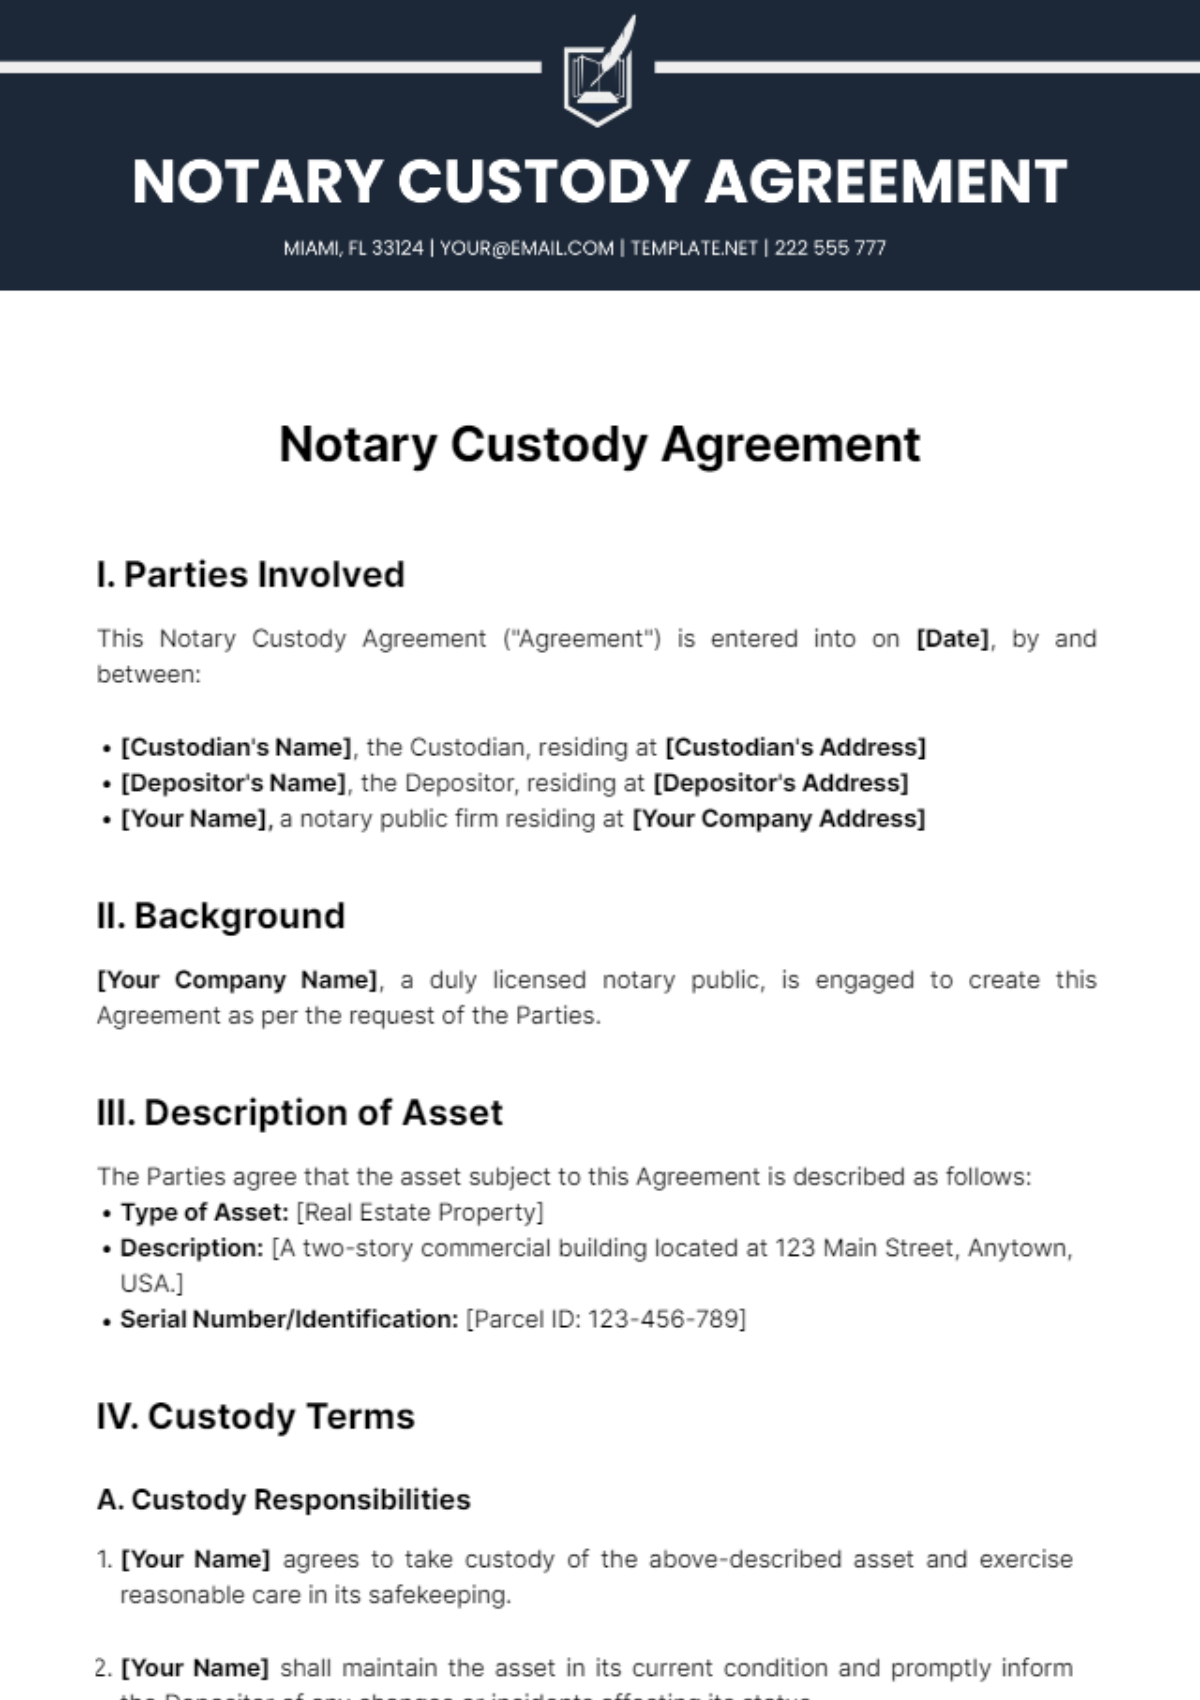 Notary Custody Agreement Template